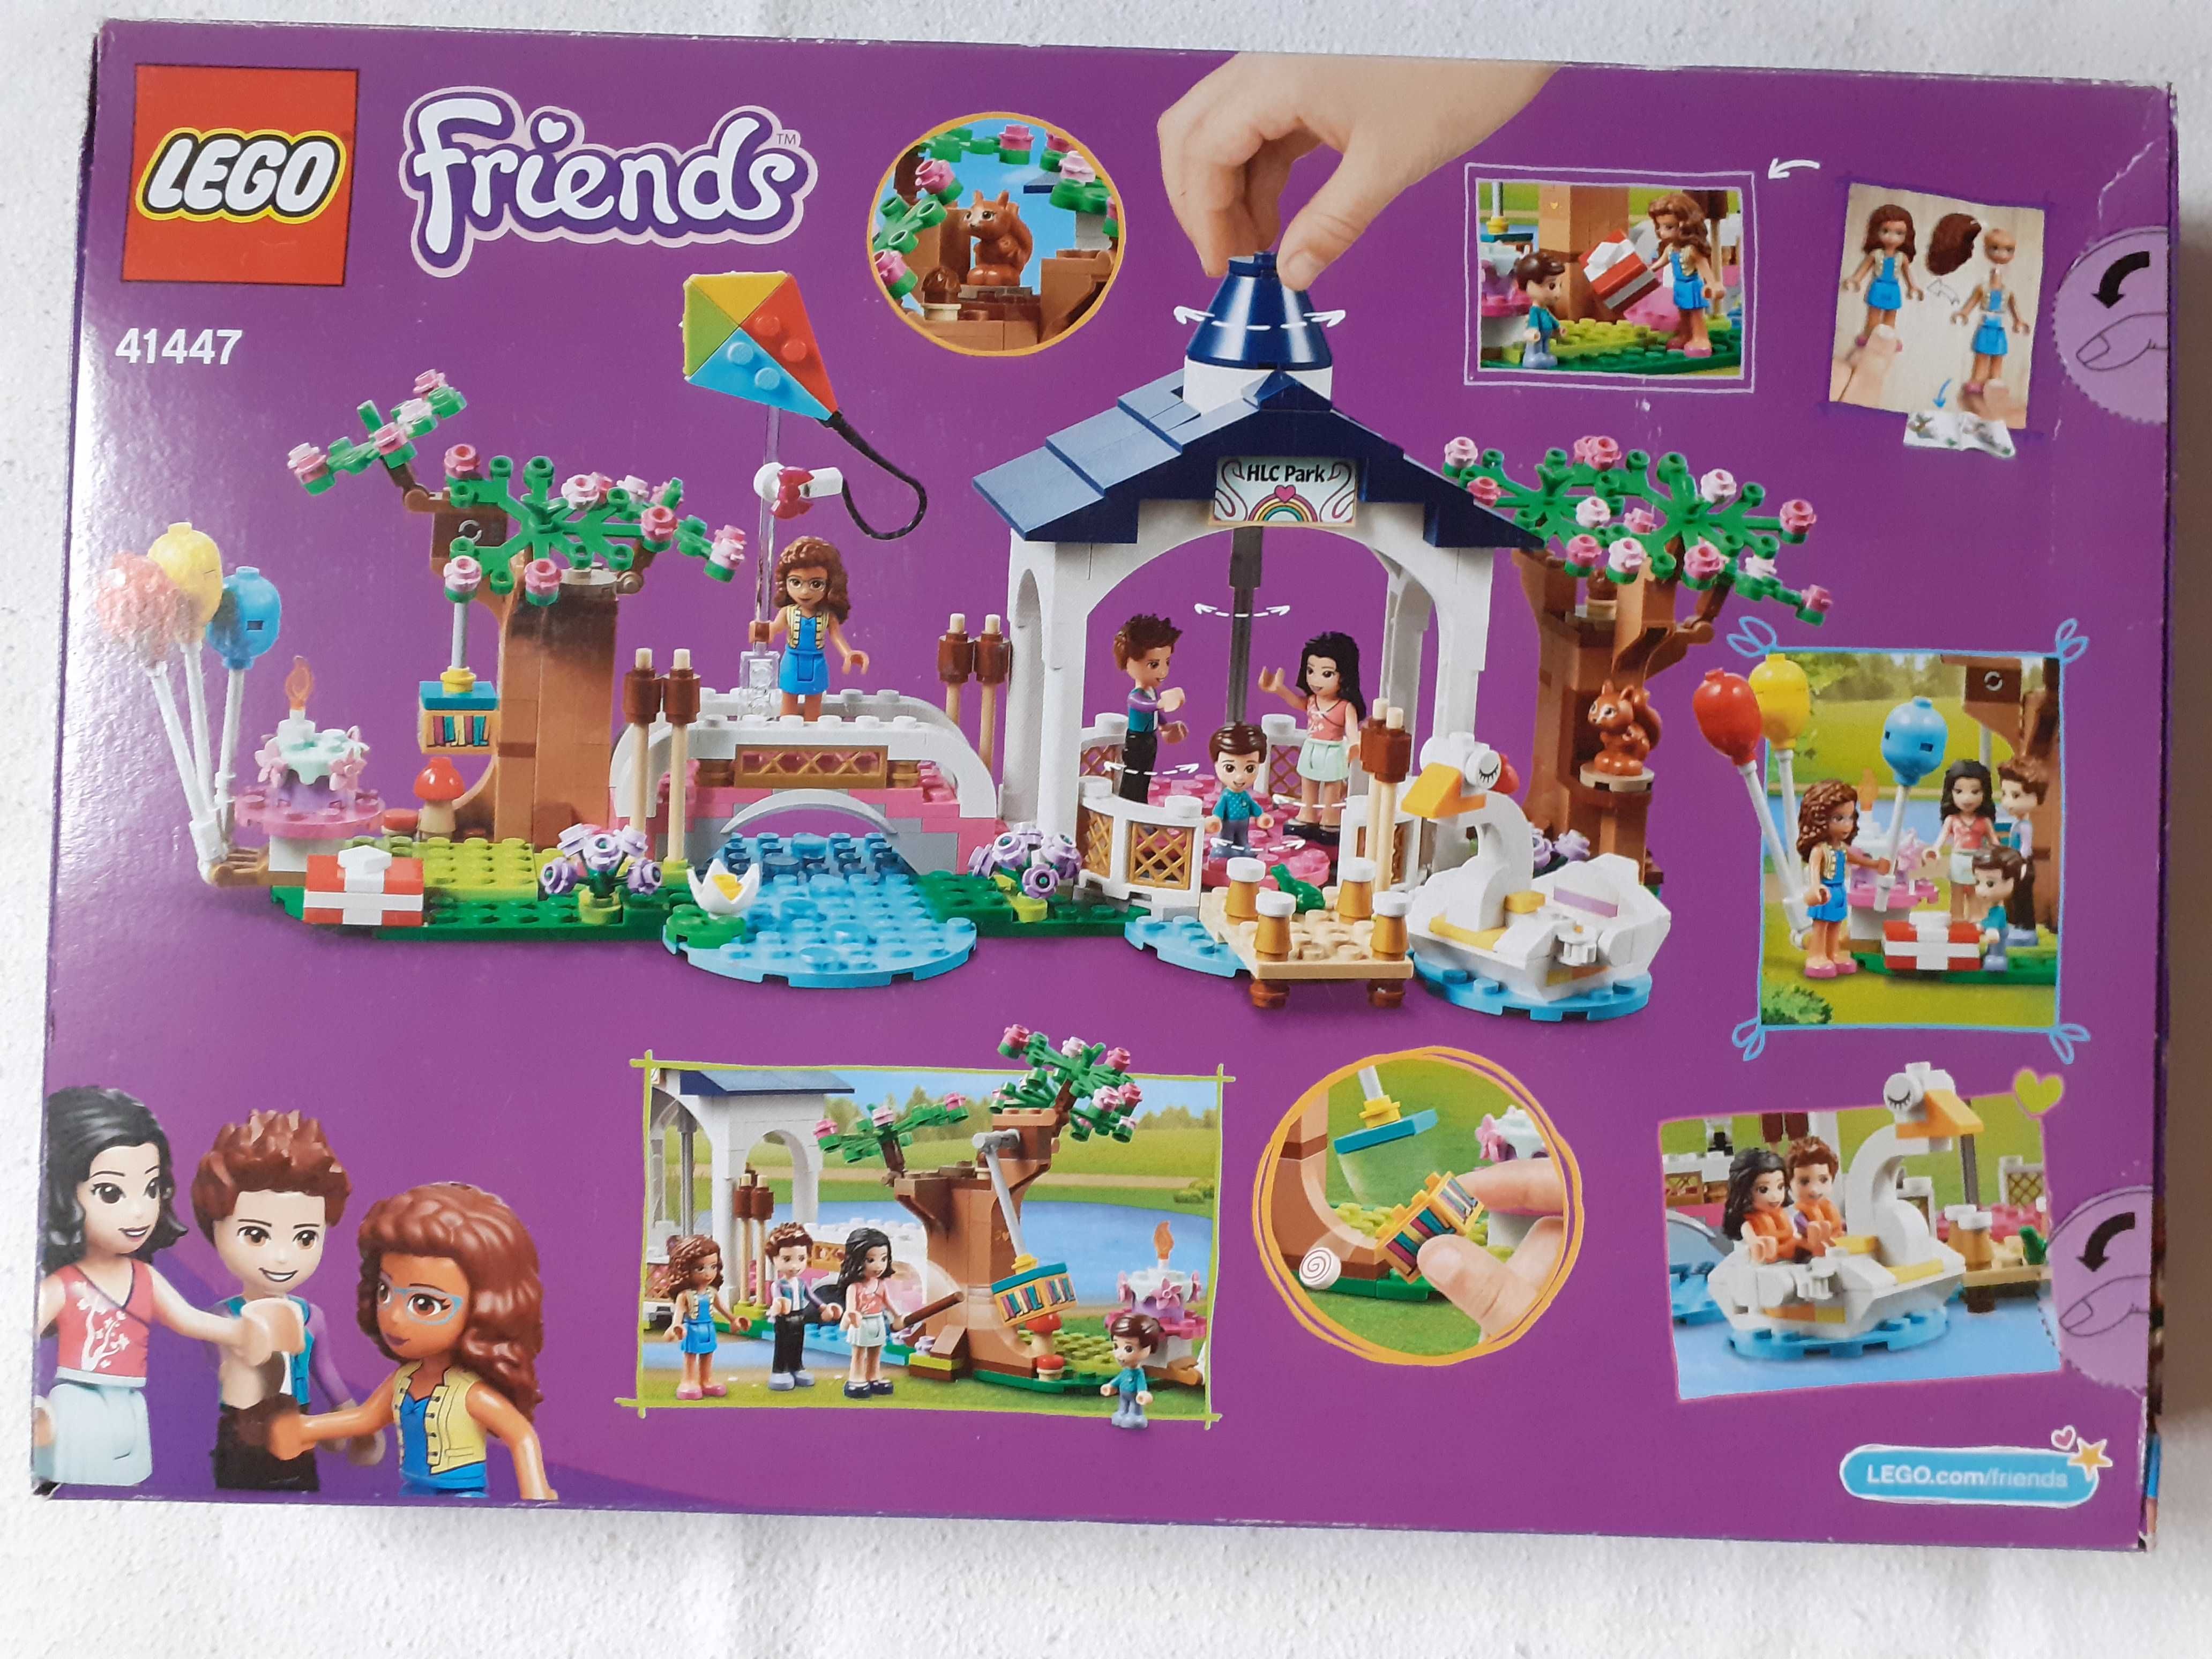 Lego Friends 41447 Parcul din Heartlake, set nou, sigilat, de cadou